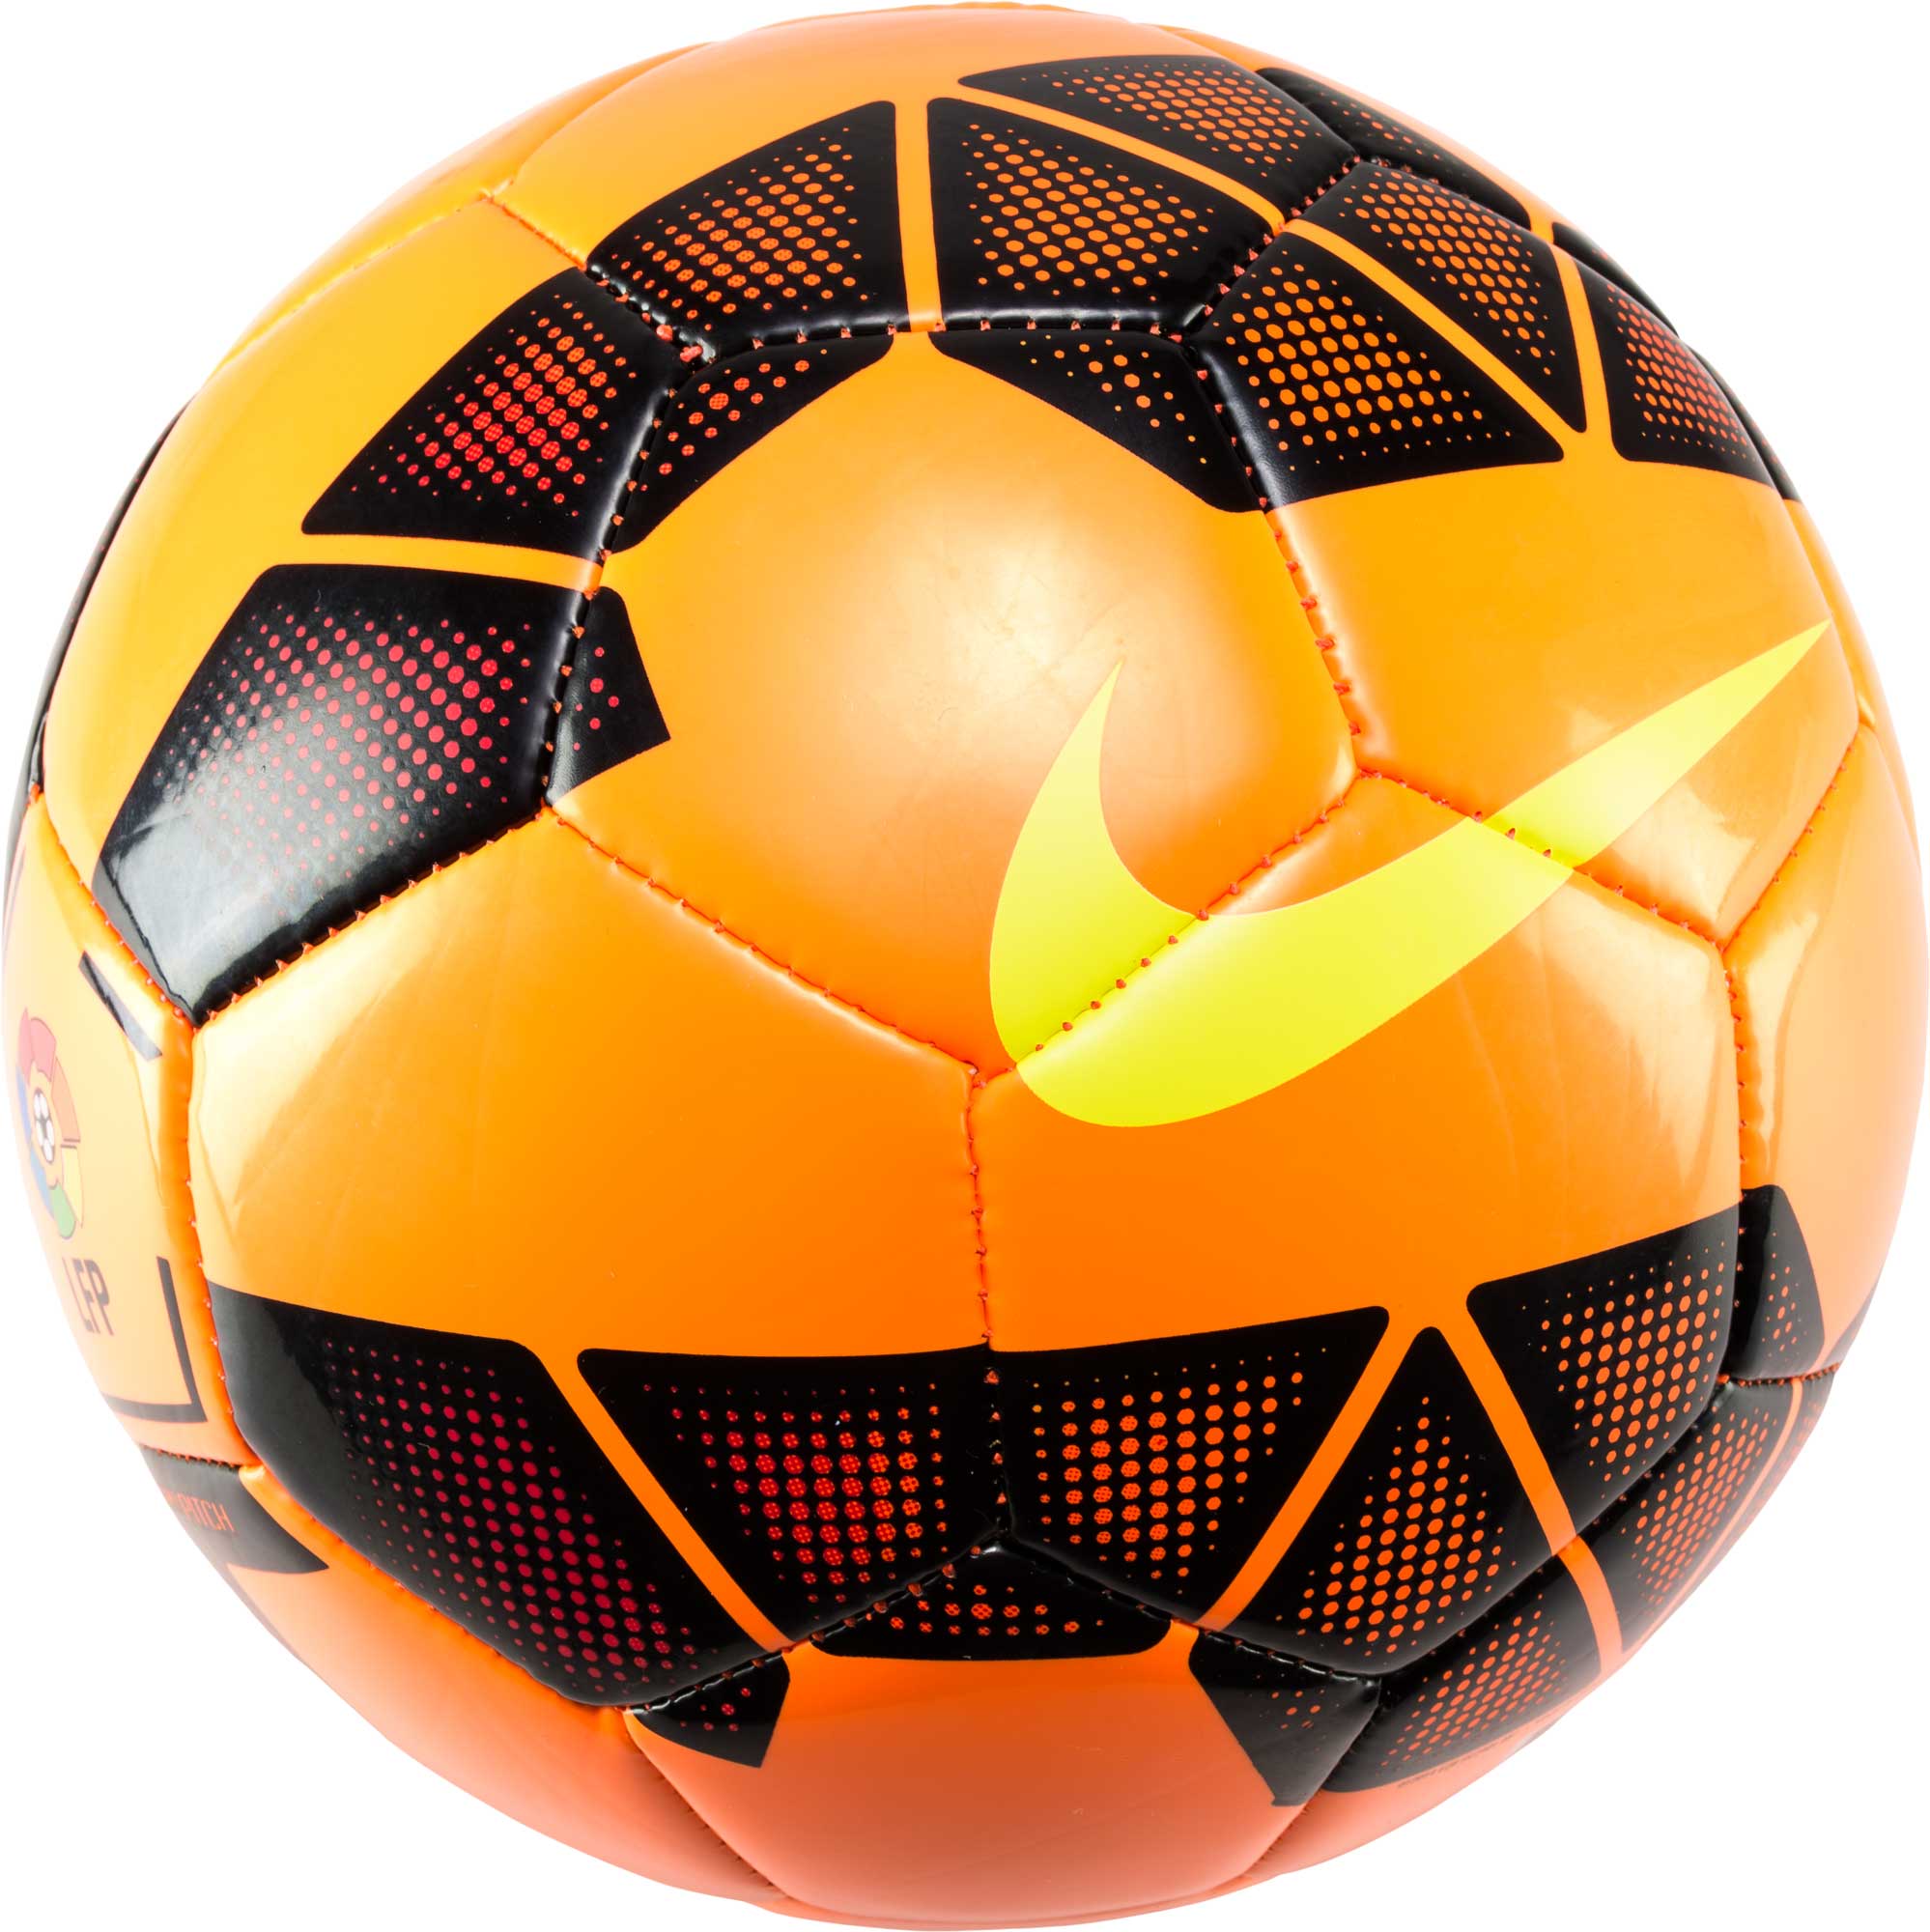 Botanist Very angry pension Nike La Liga Pitch Soccer Ball - Nike Training Soccer Balls